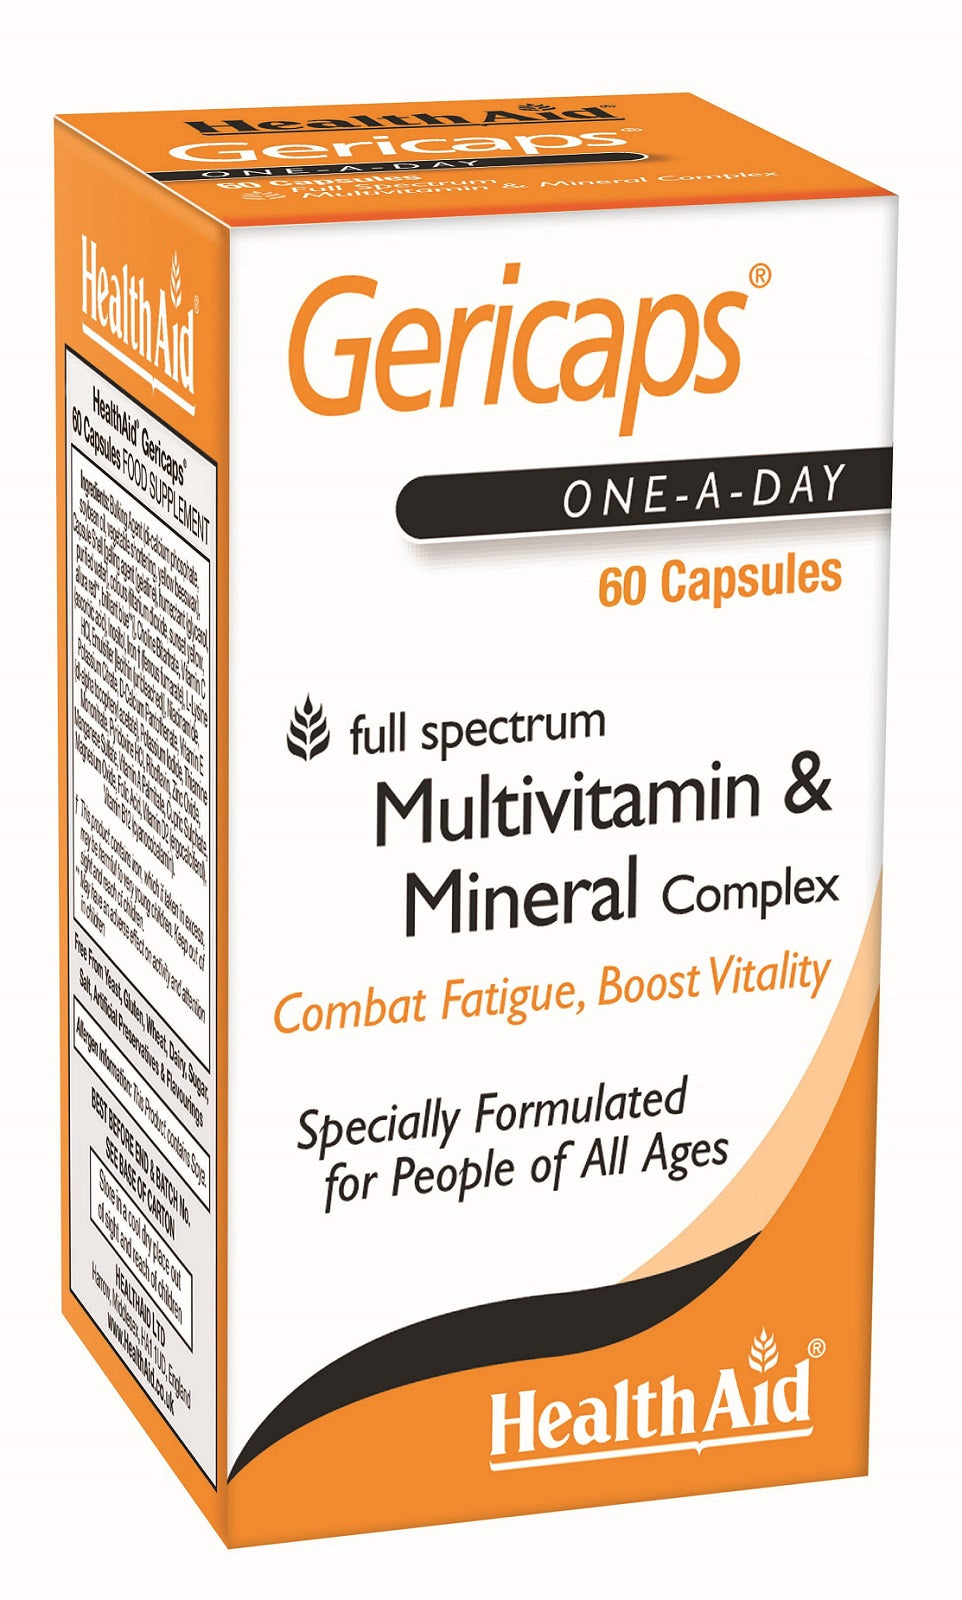 Health Aid Gericaps Multivitamin & Mineral Complex